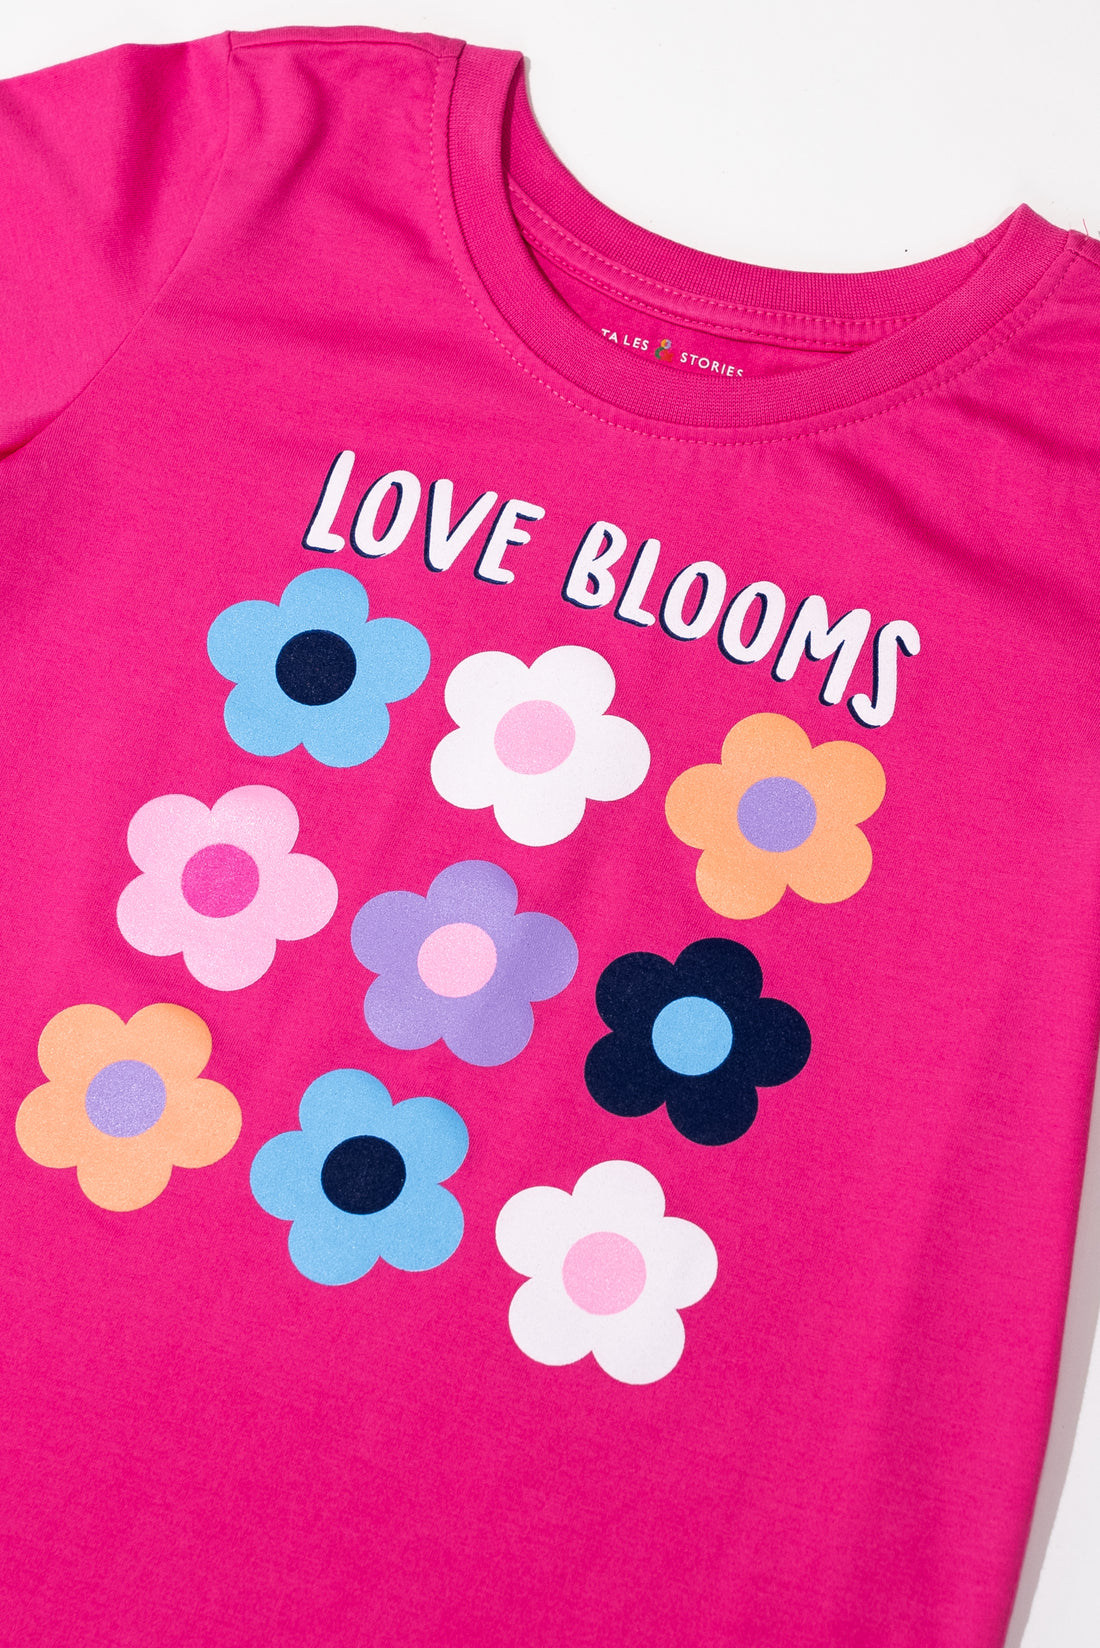 Long Sleeve Love Blooms Graphic Tee